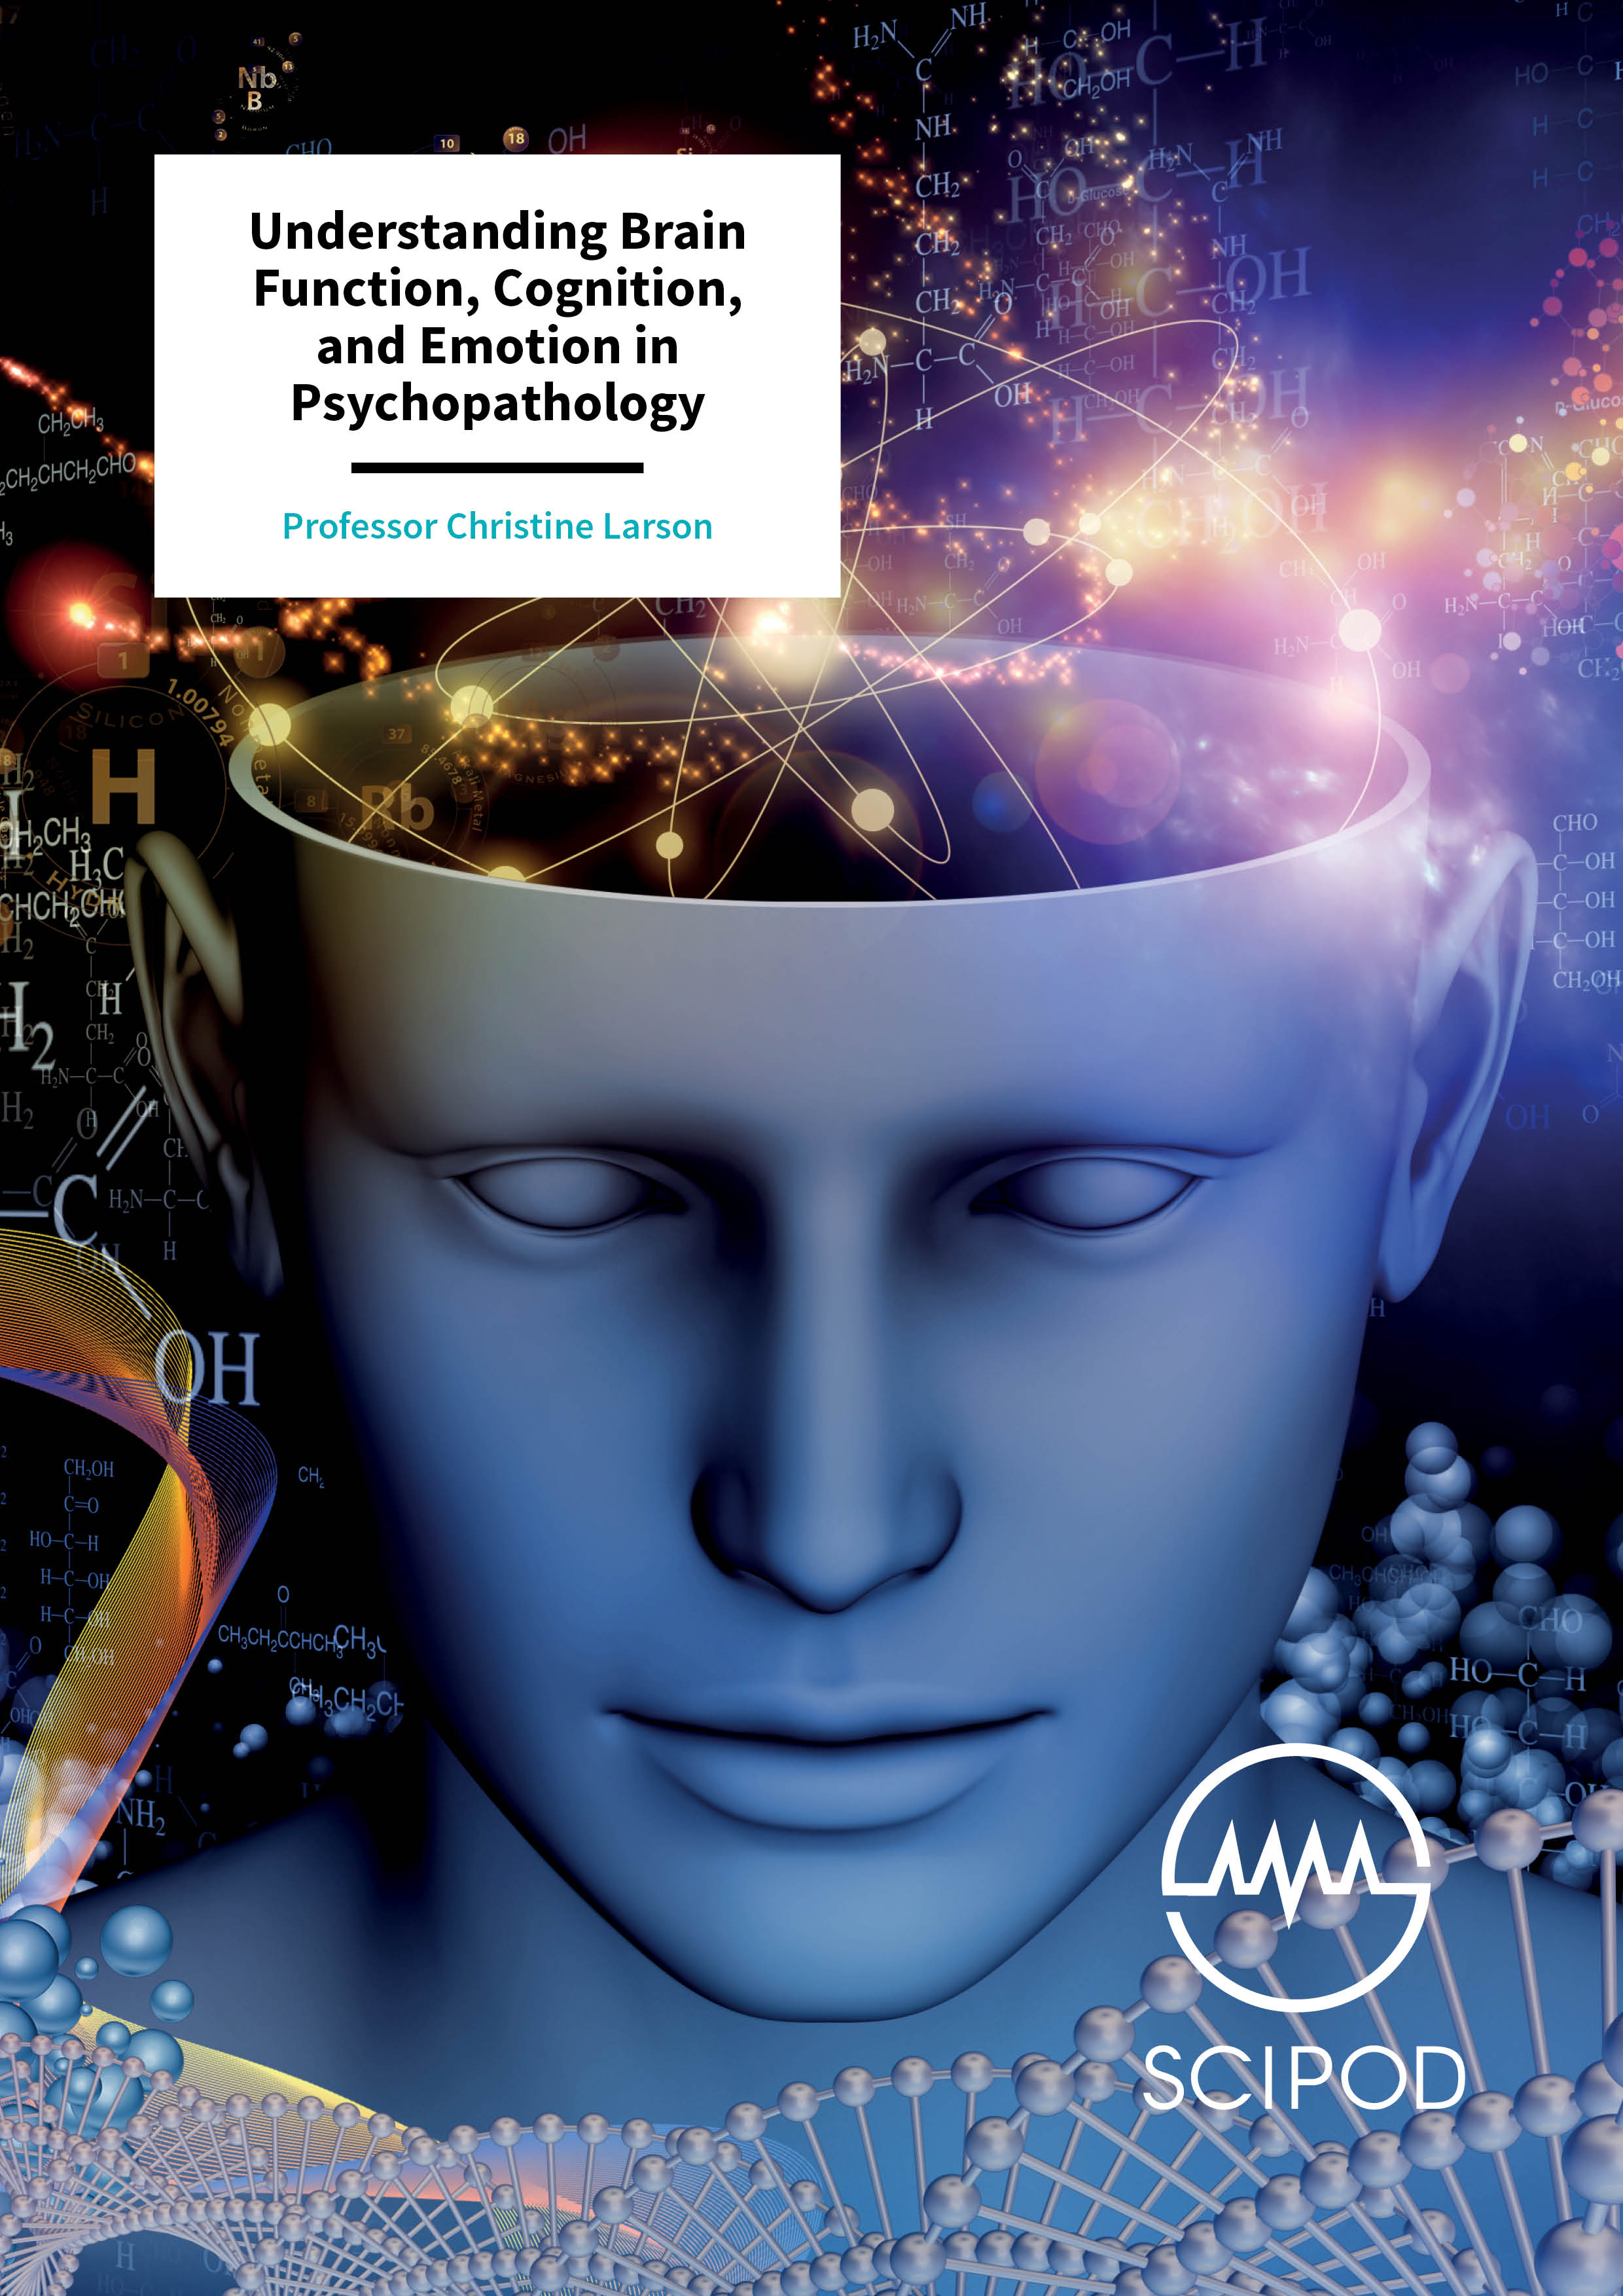 Understanding Brain Function, Cognition, and Emotion in Psychopathology- Professor Christine Larson, University of Wisconsin-Milwaukee